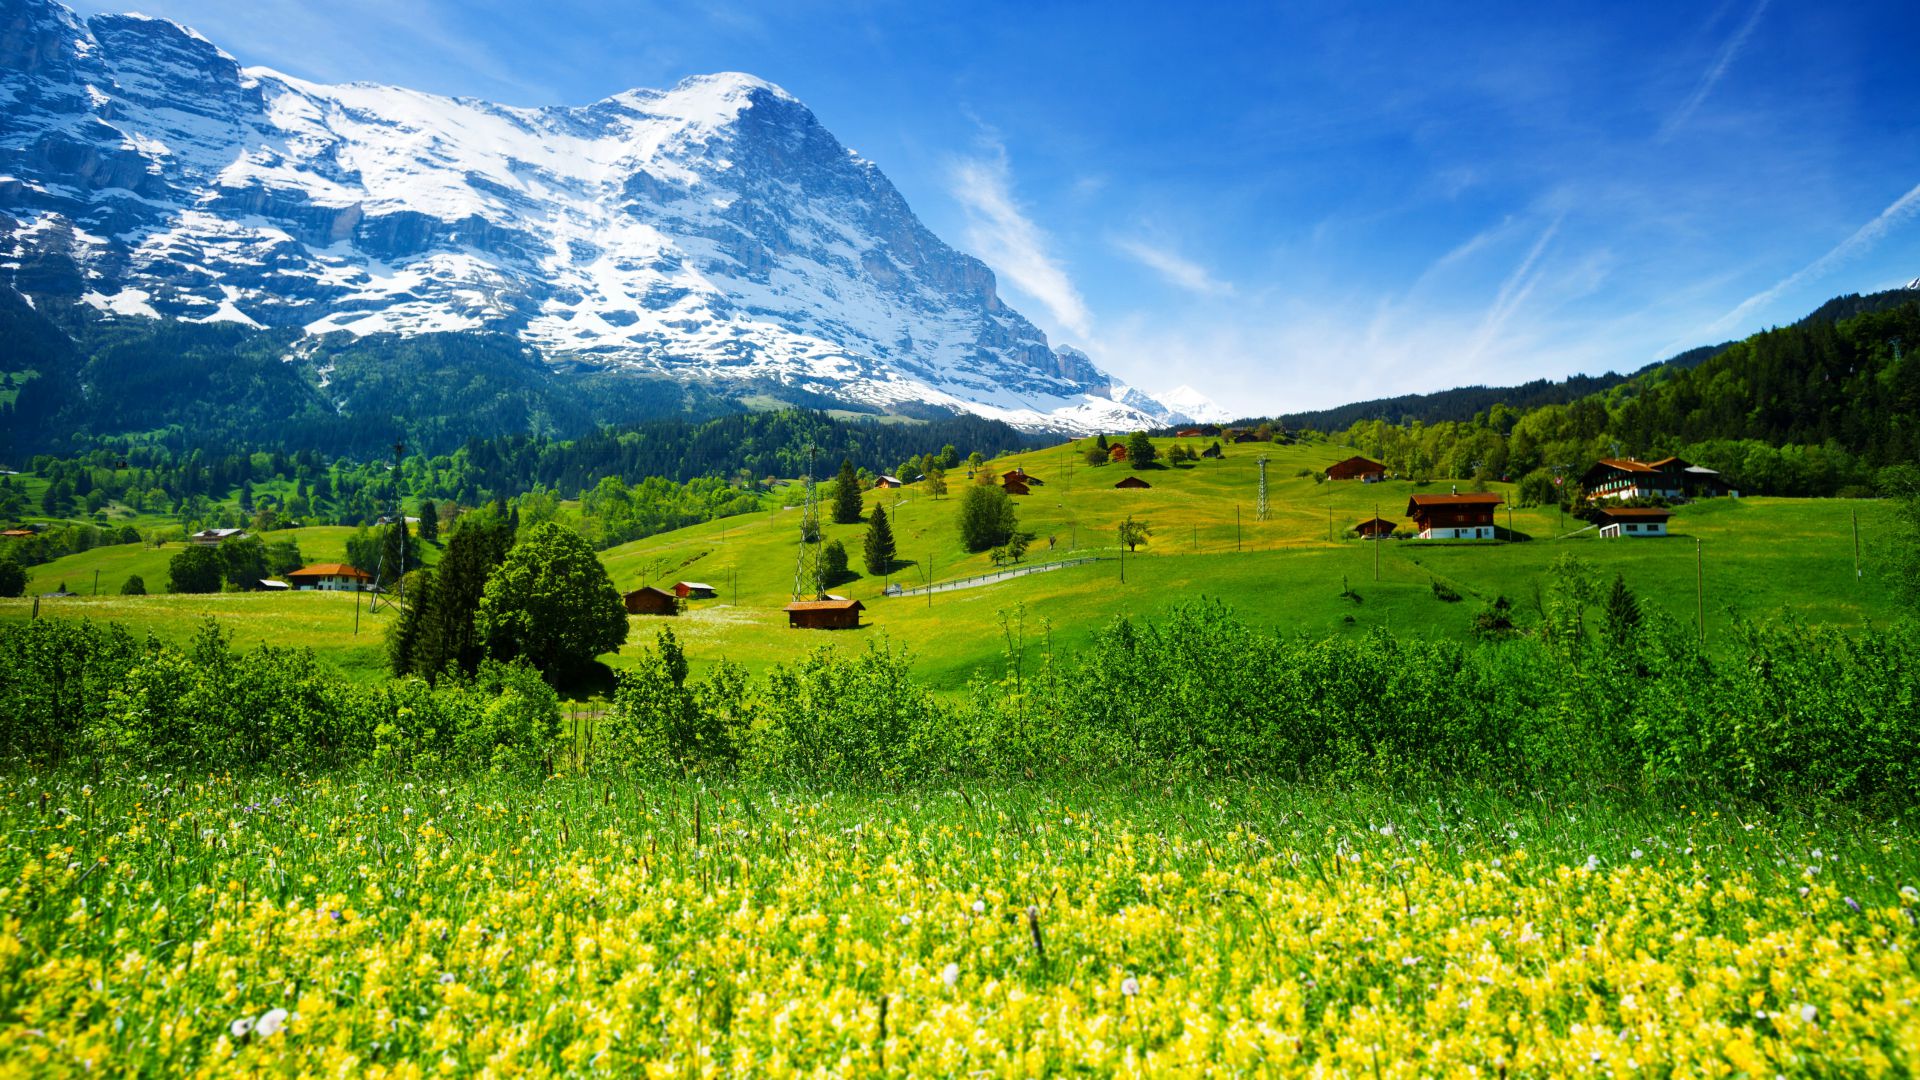 Switzerland, 5k, 4k wallpaper, mountains, meadows, wildflowers (horizontal)